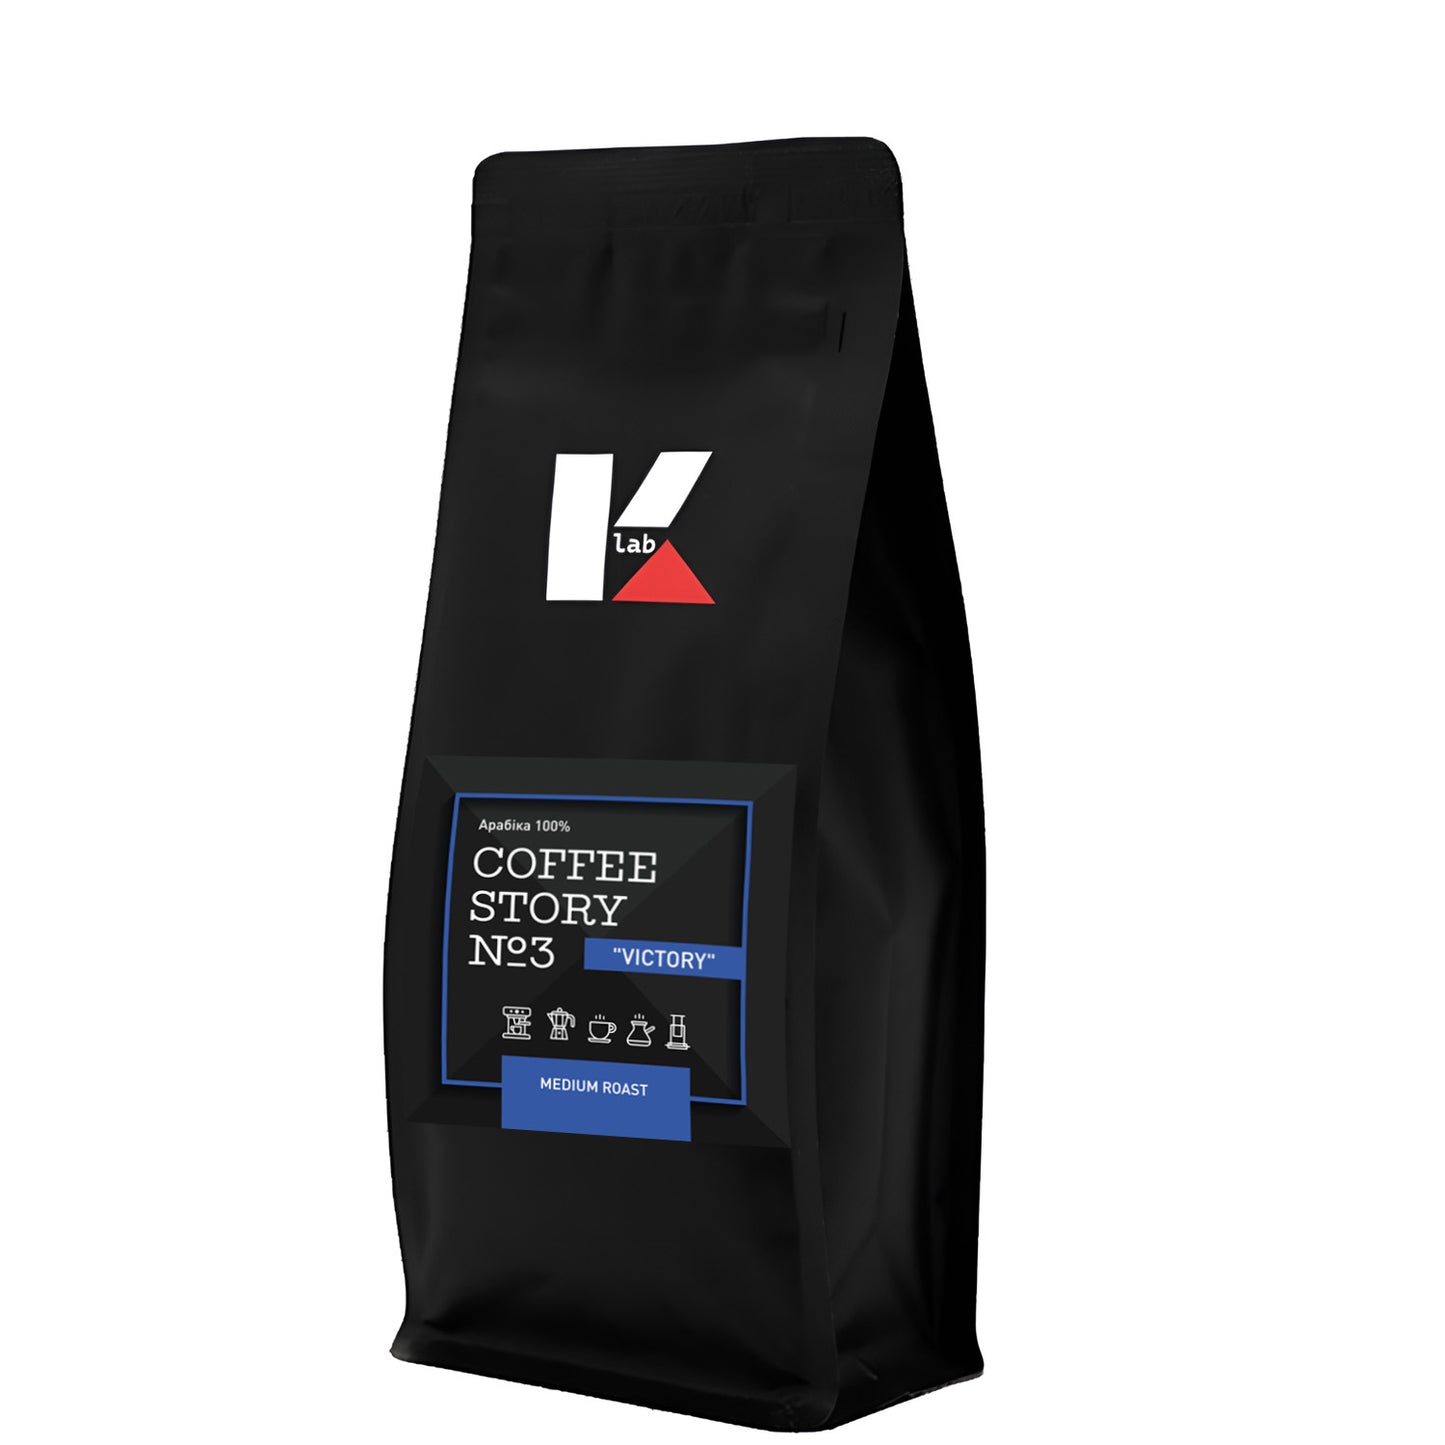 COFFEE STORY №3 - Klab (1kg front)